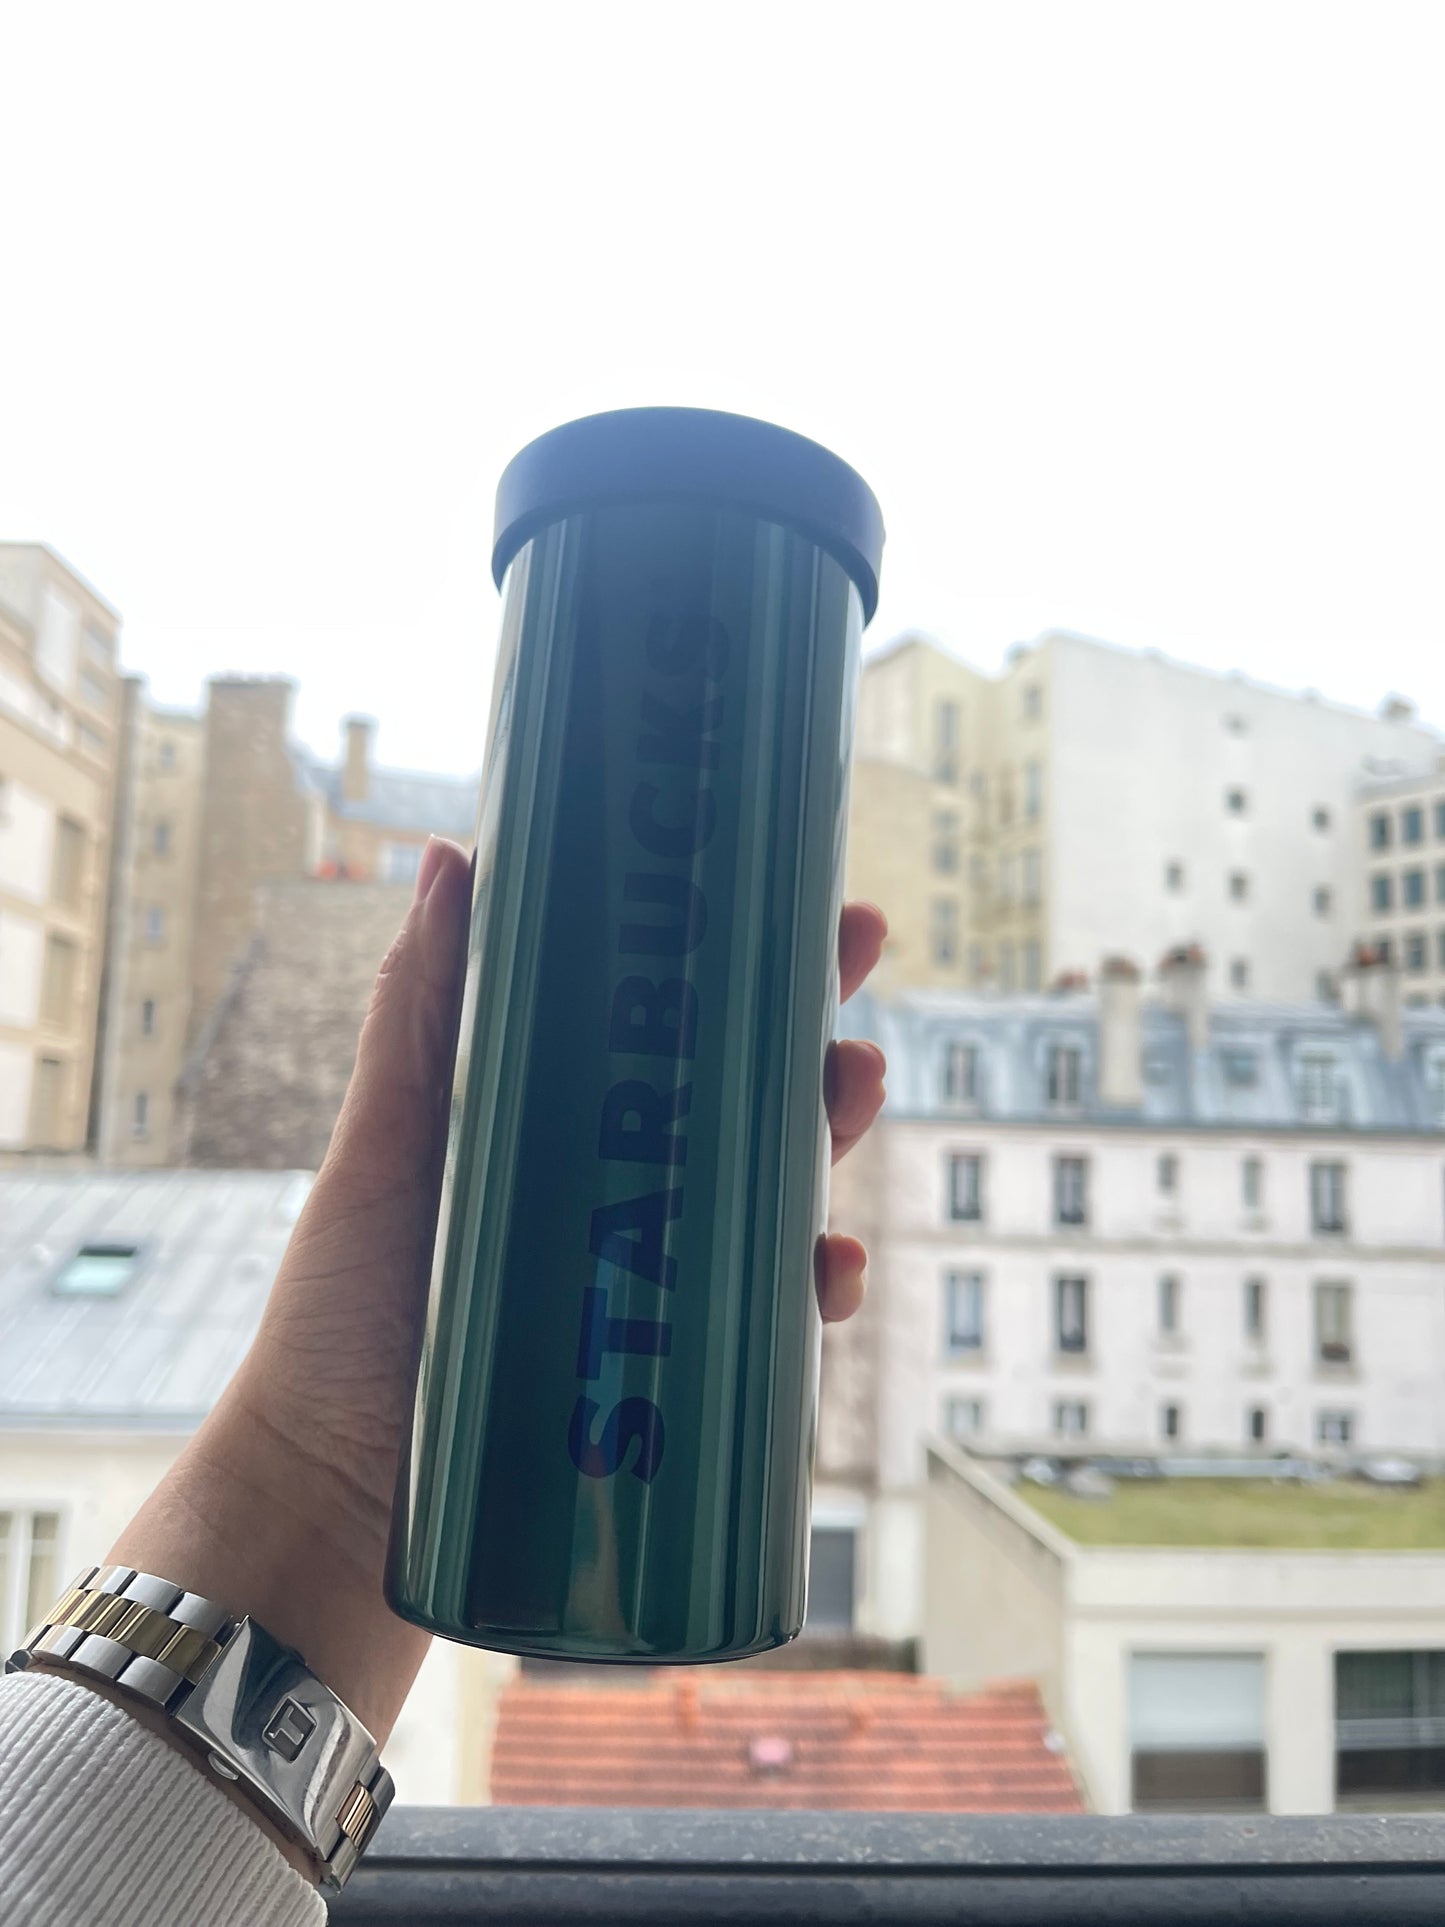 Press to go Starbucks : Cafetière à piston portative